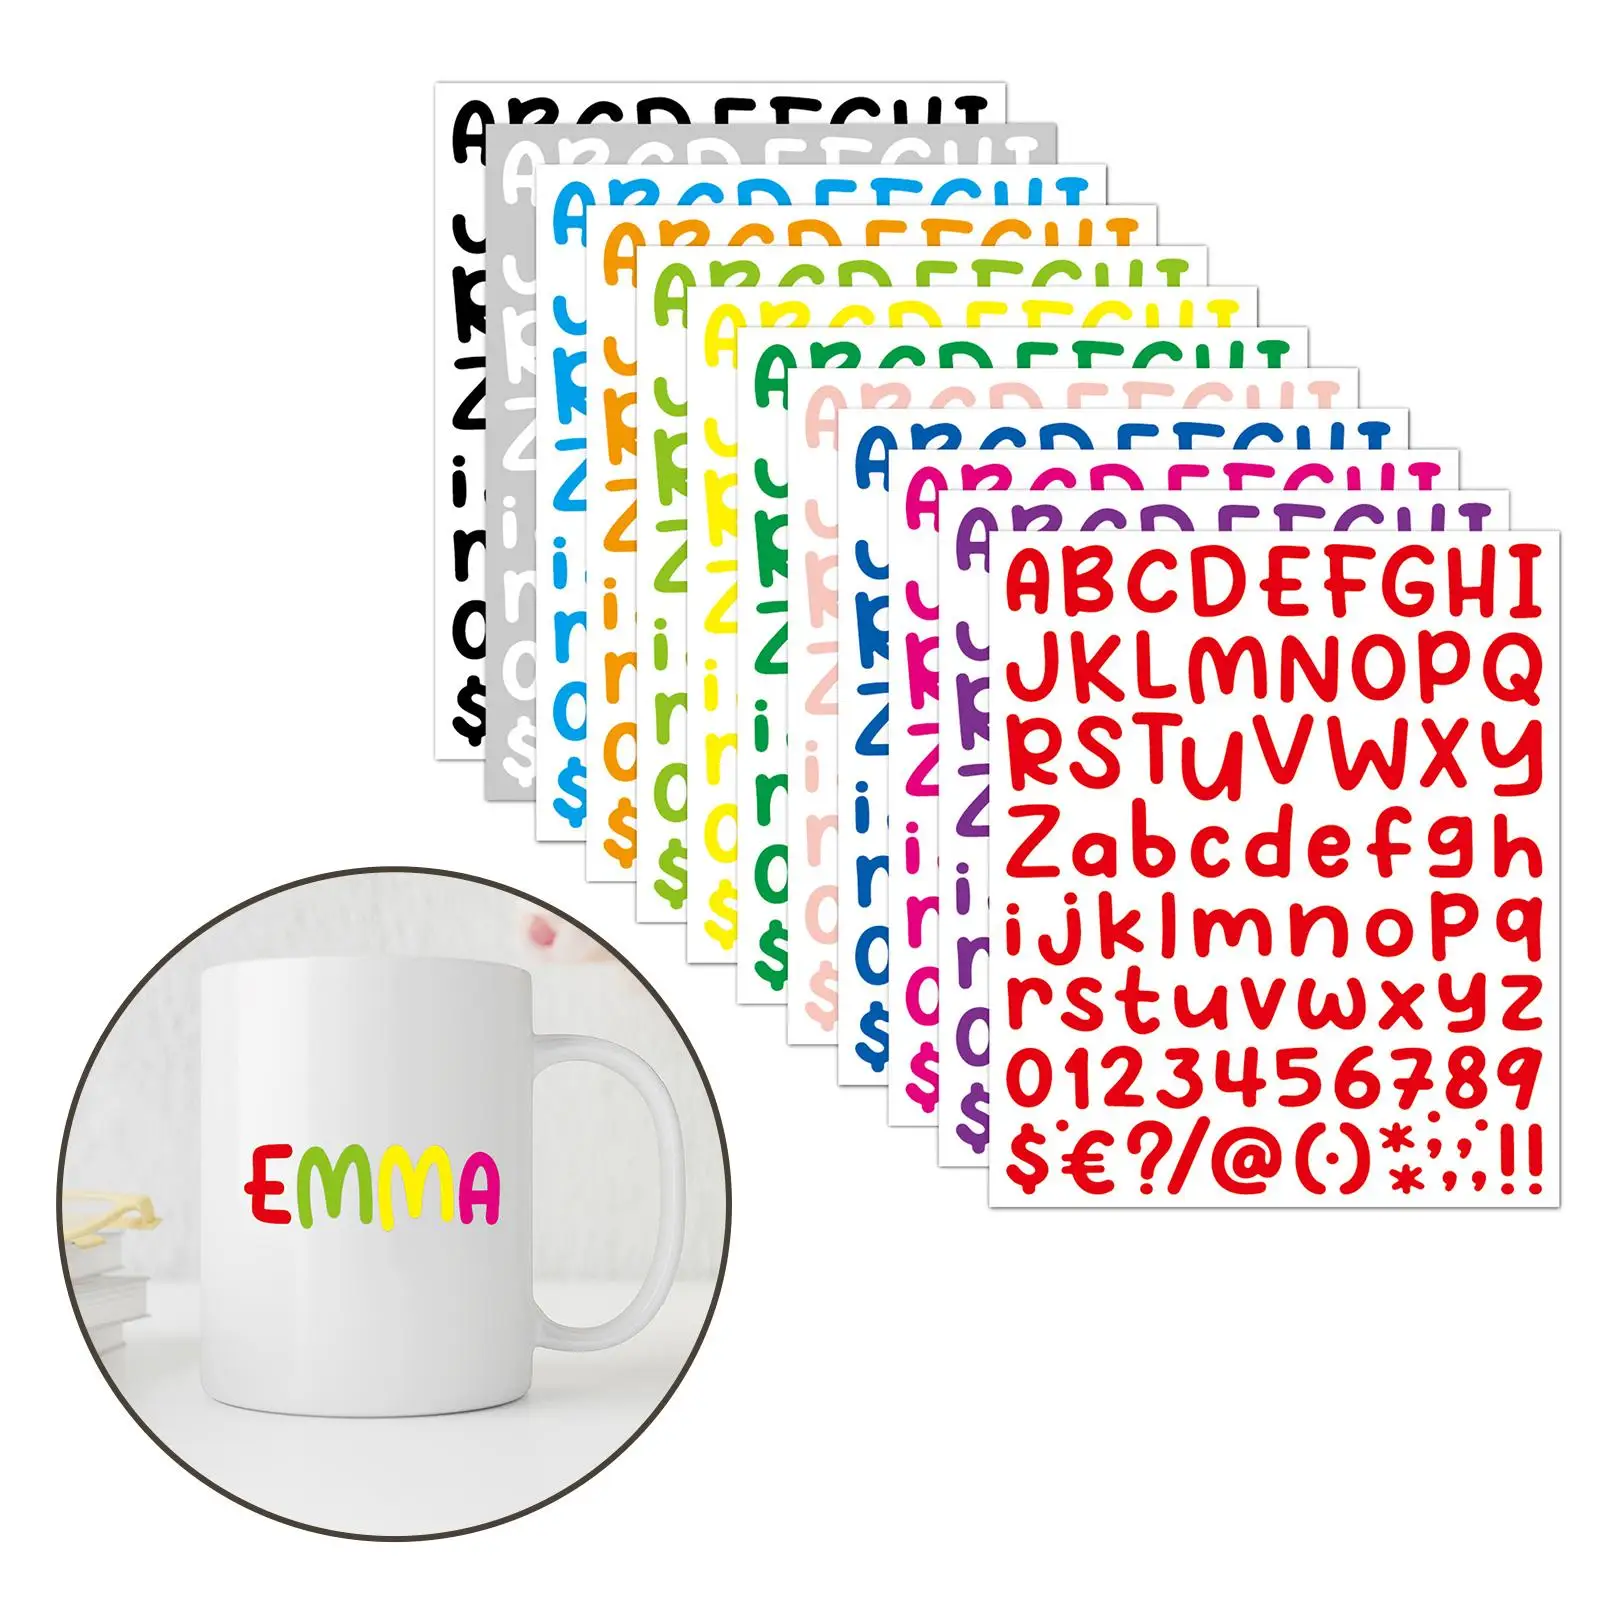 12x Colorful Letter Stickers Alphabet Letter Stickers Letter Stickers for Kids for Cups Mailbox Water Bottles